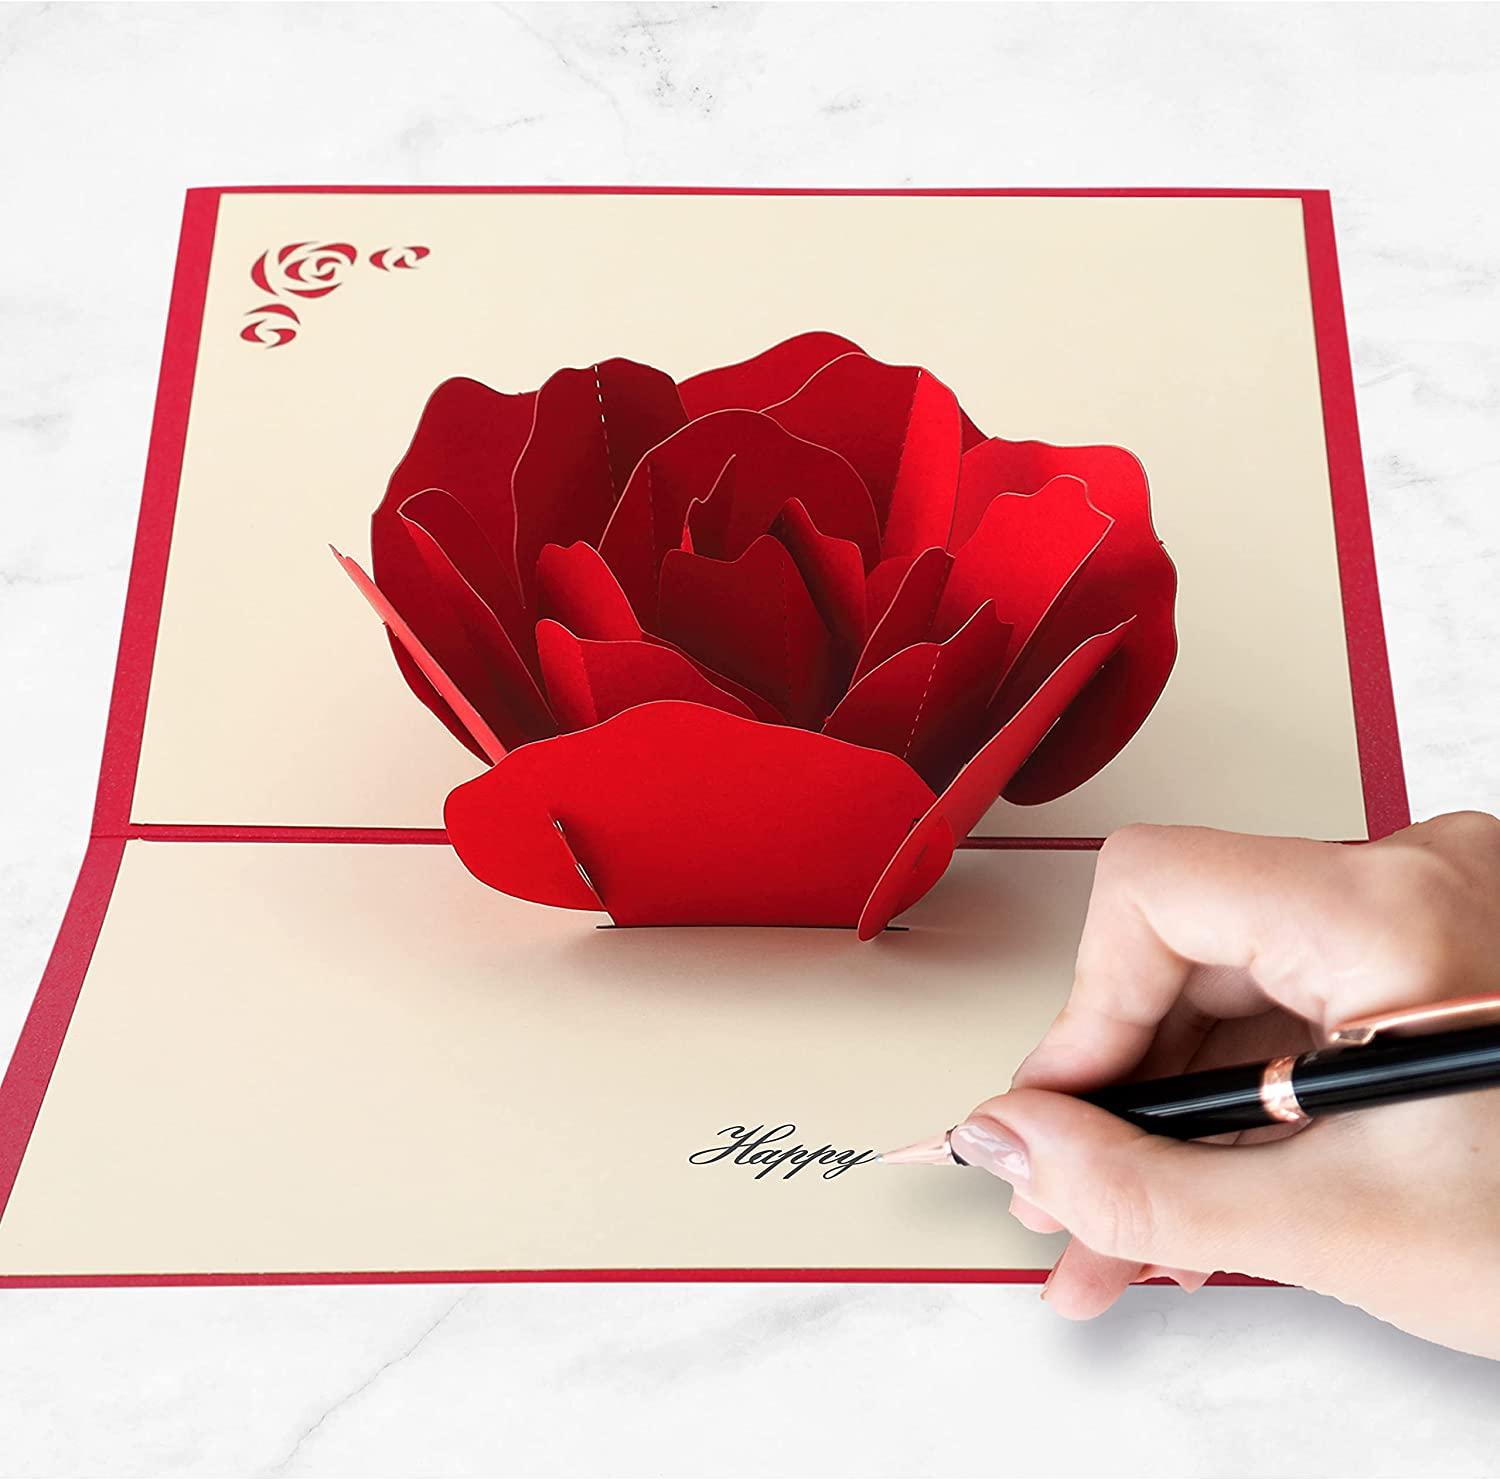 Happy Birthday Card with Flowers | Happy Birthday Flower Card | Lovepop